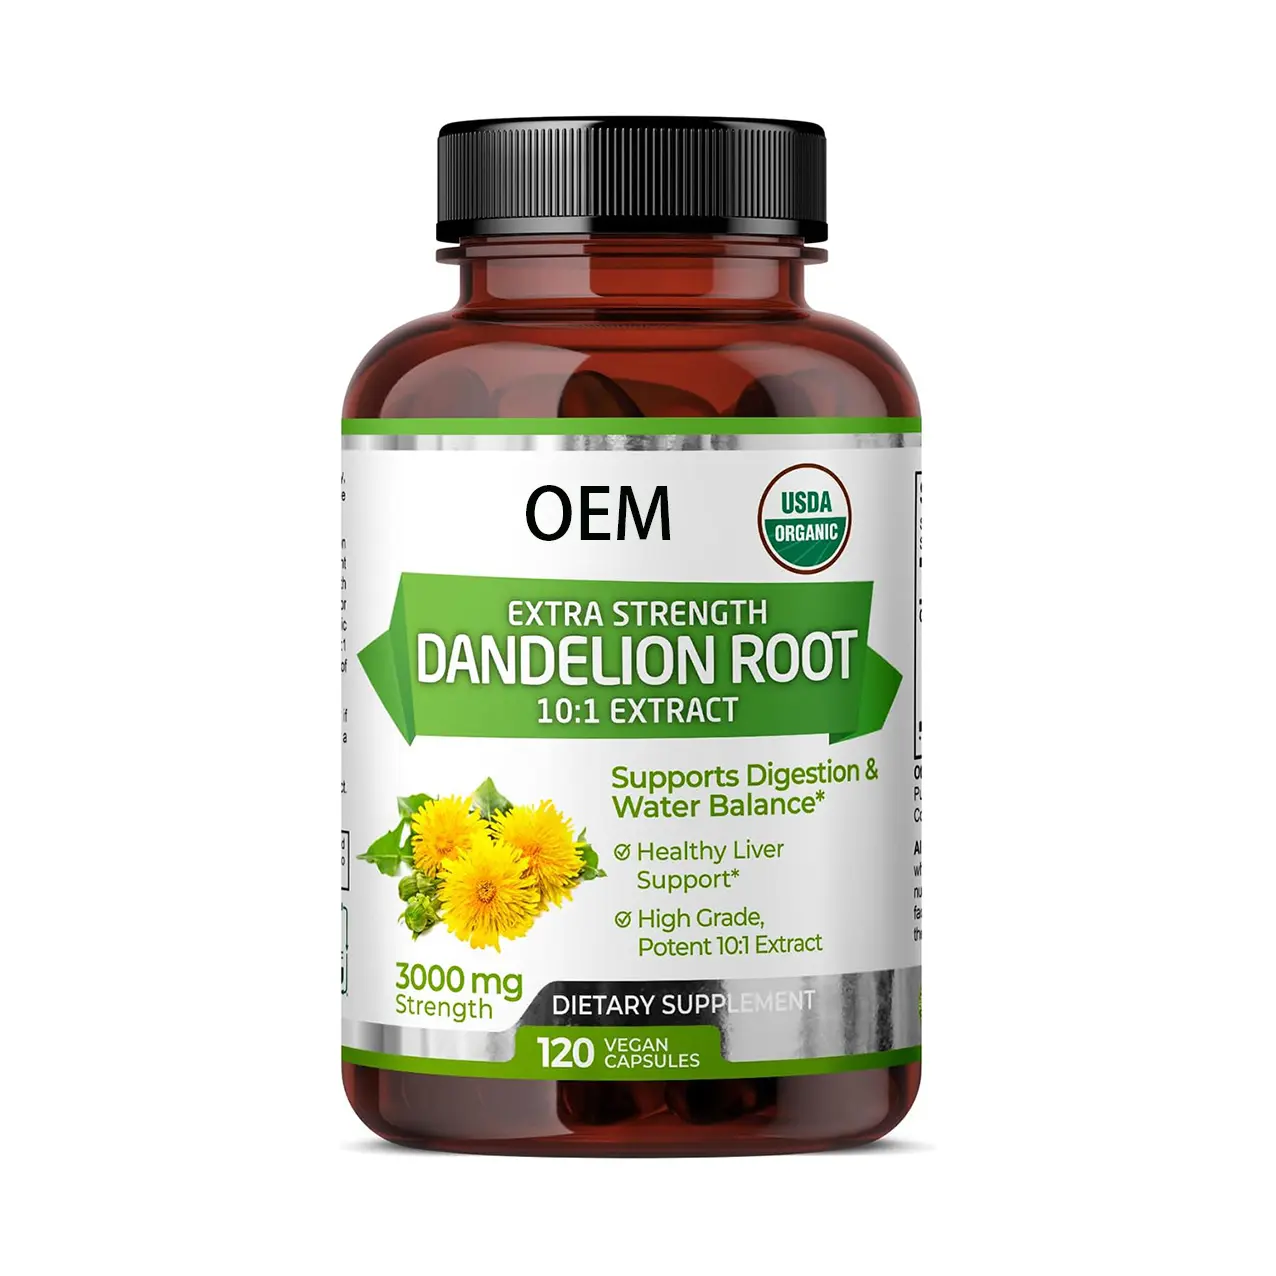 OEM Private Label Liver Support Dandelion Root Extract Giant Dandelion Root 3000mg Dandelion Capsules